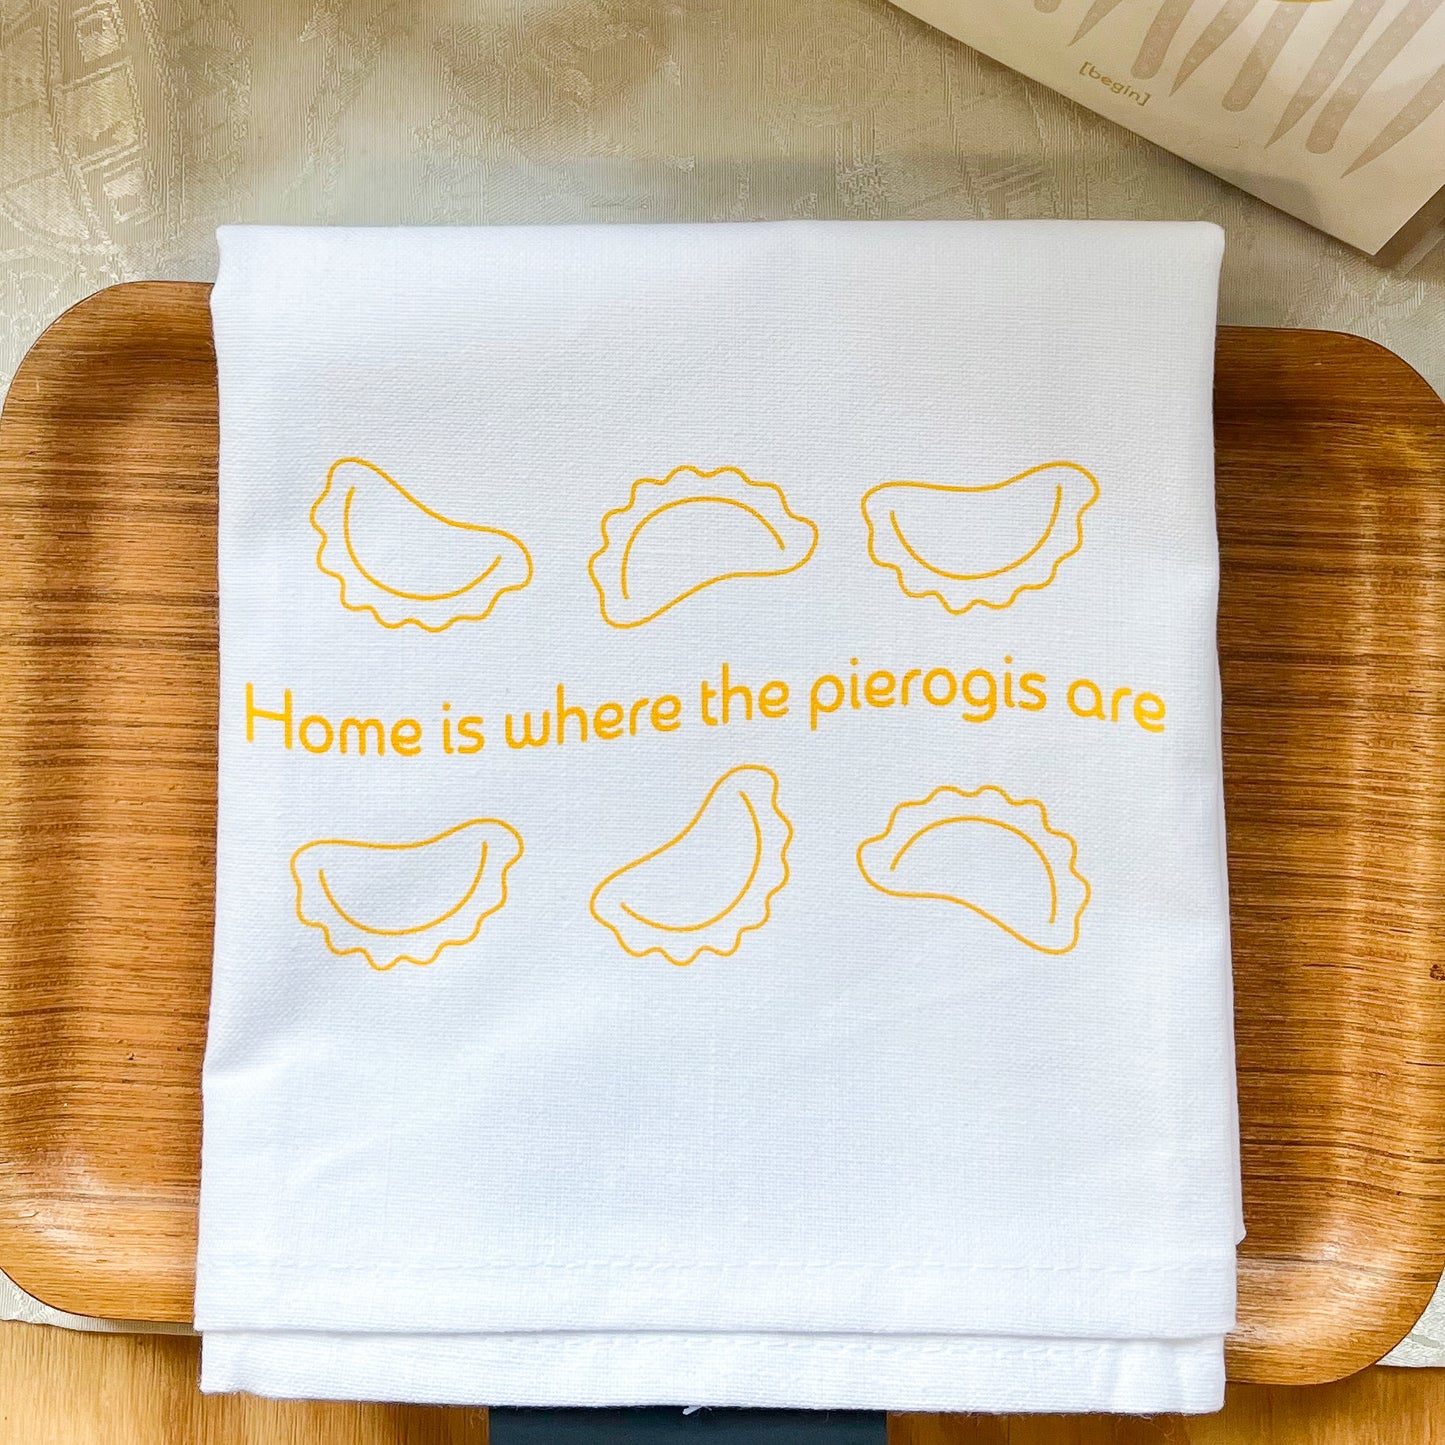 Pierogis are Home Tea Towel